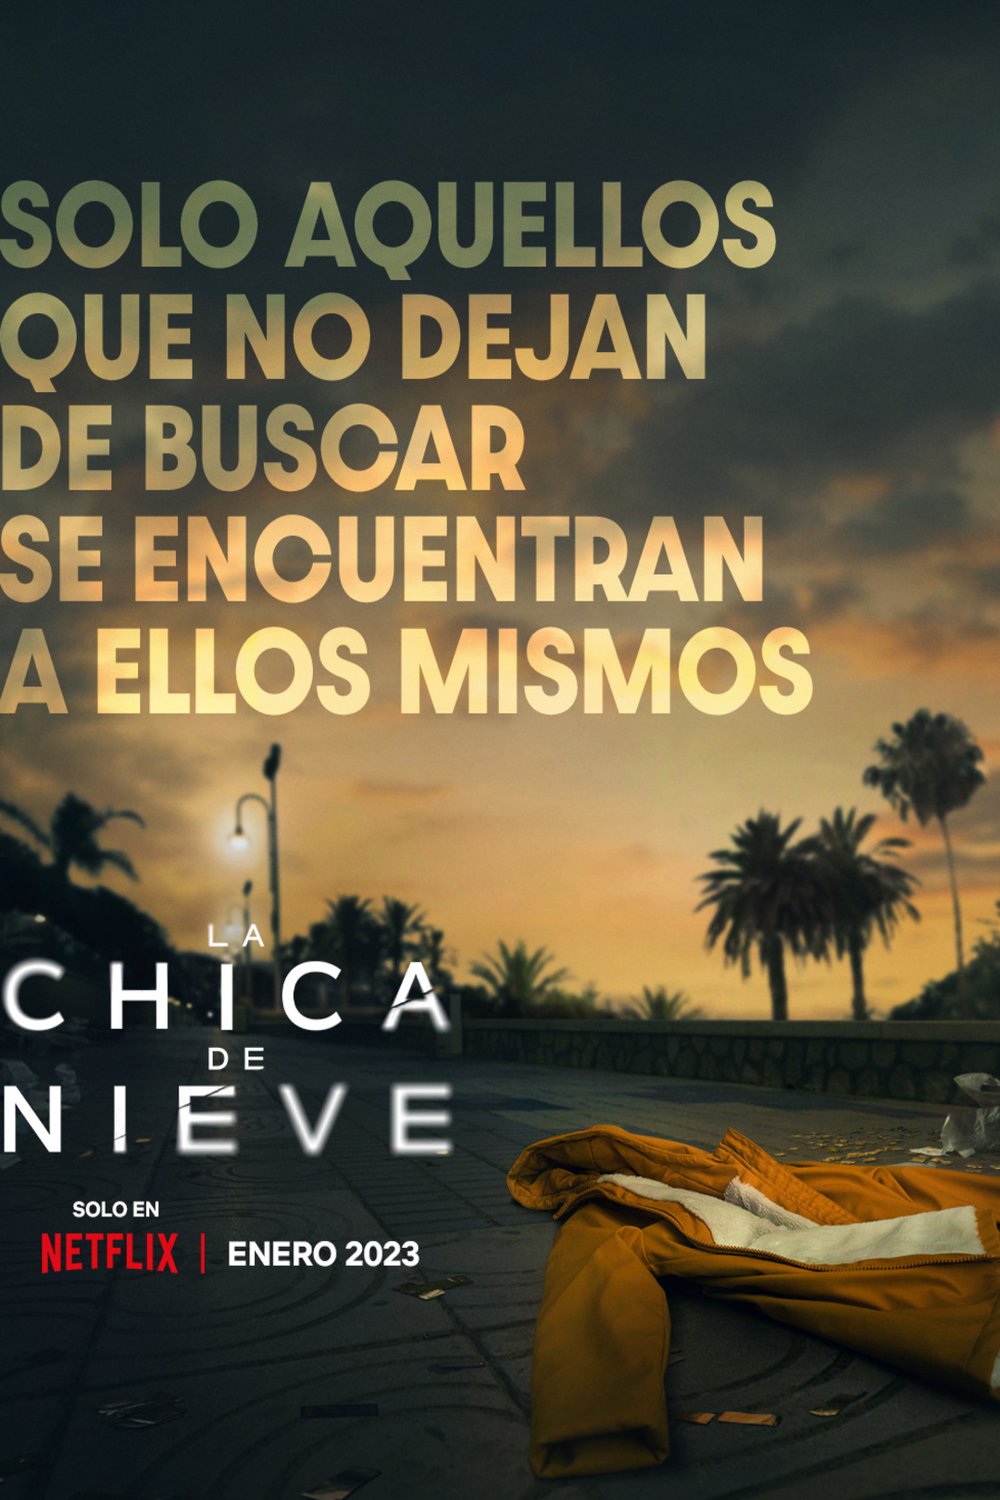 Spanish poster of the movie La chica de nieve